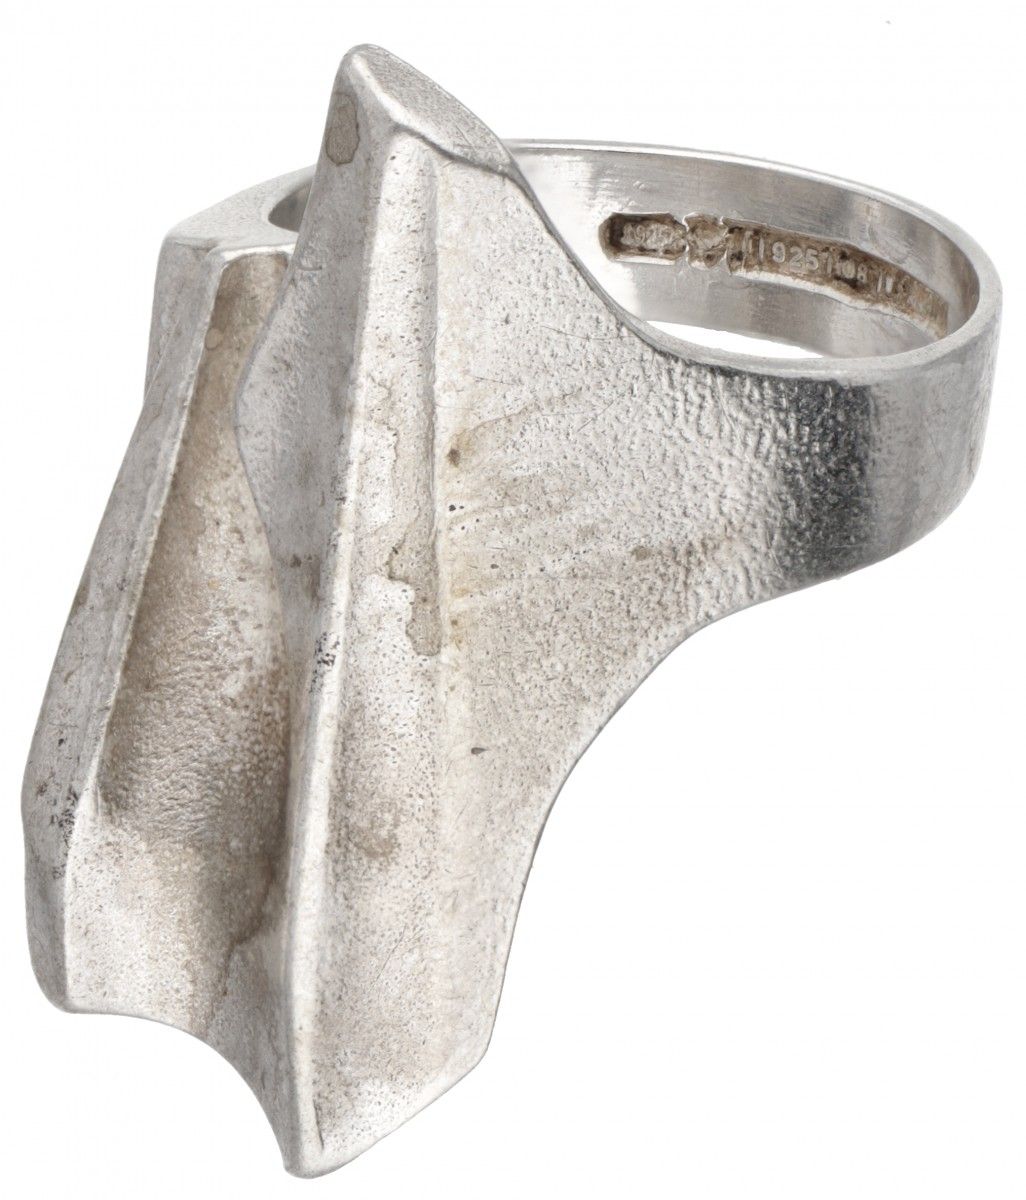 Björn Weckström for Lapponia silver 'Shuttle' ring - 925/1000. Marchi: 925, marc&hellip;